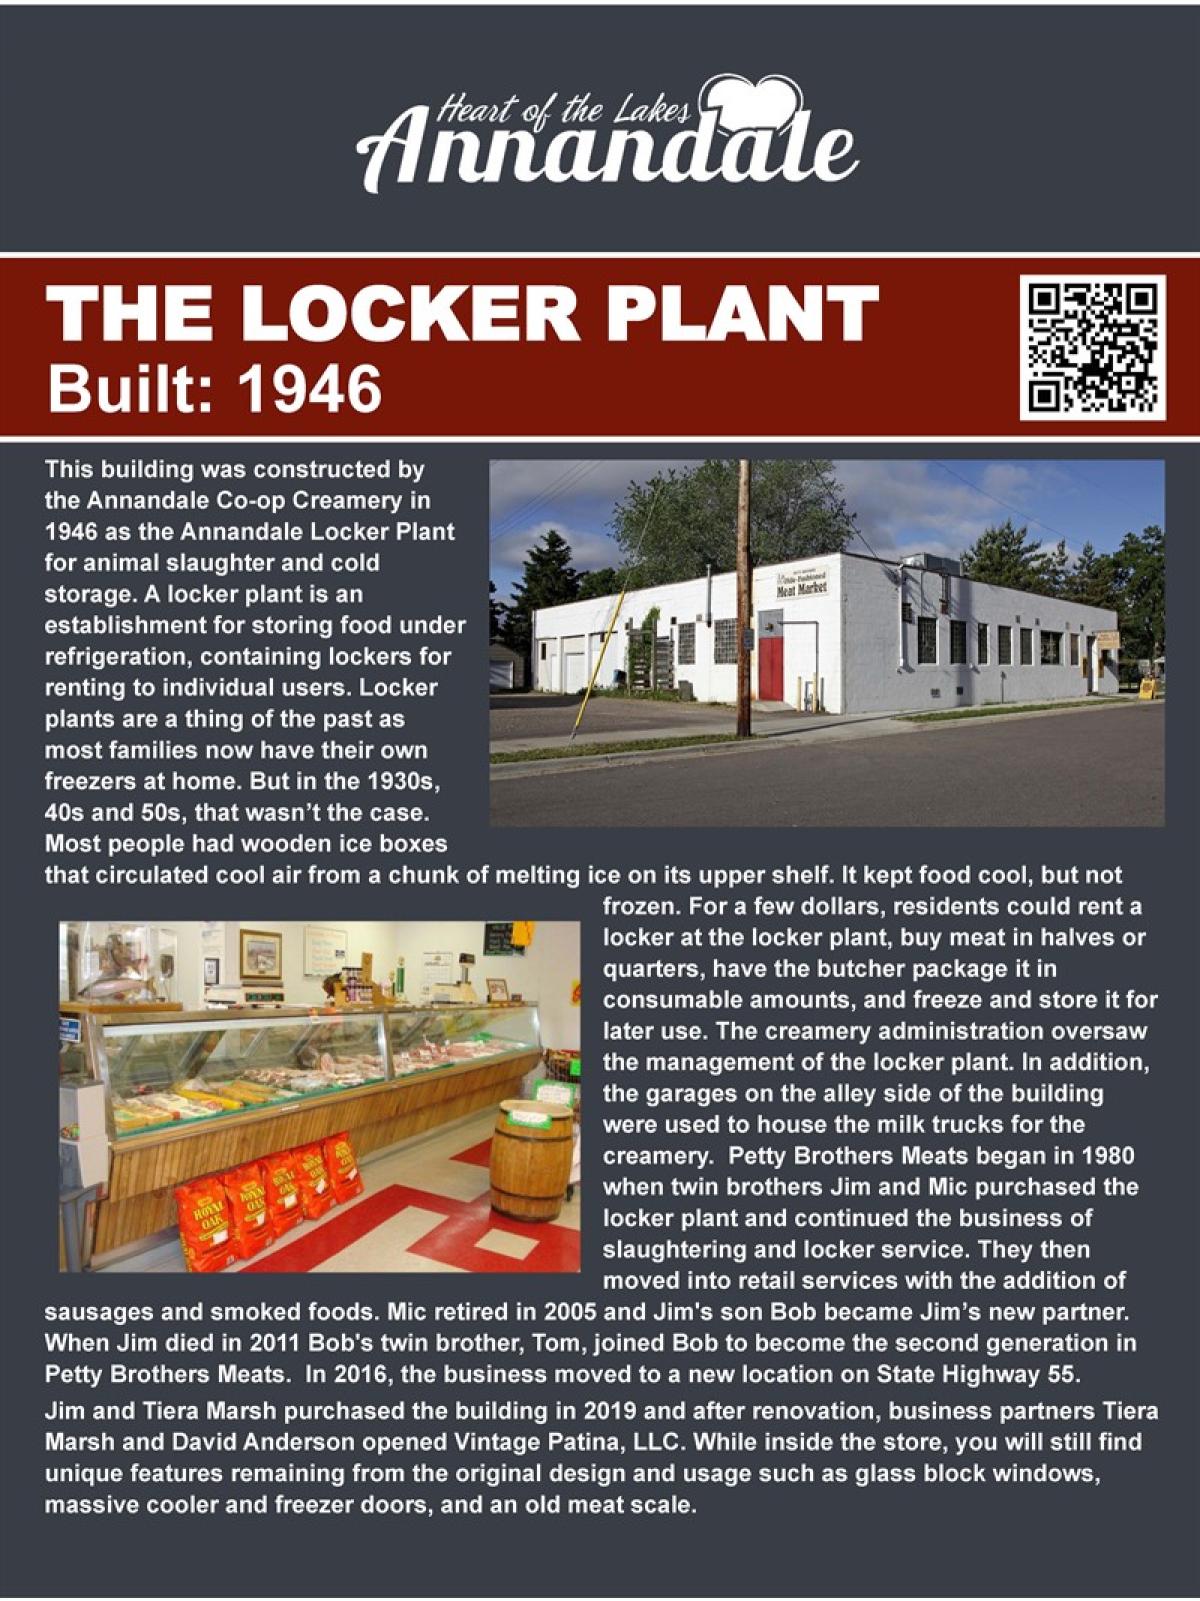 The Locker Plant walking tour information